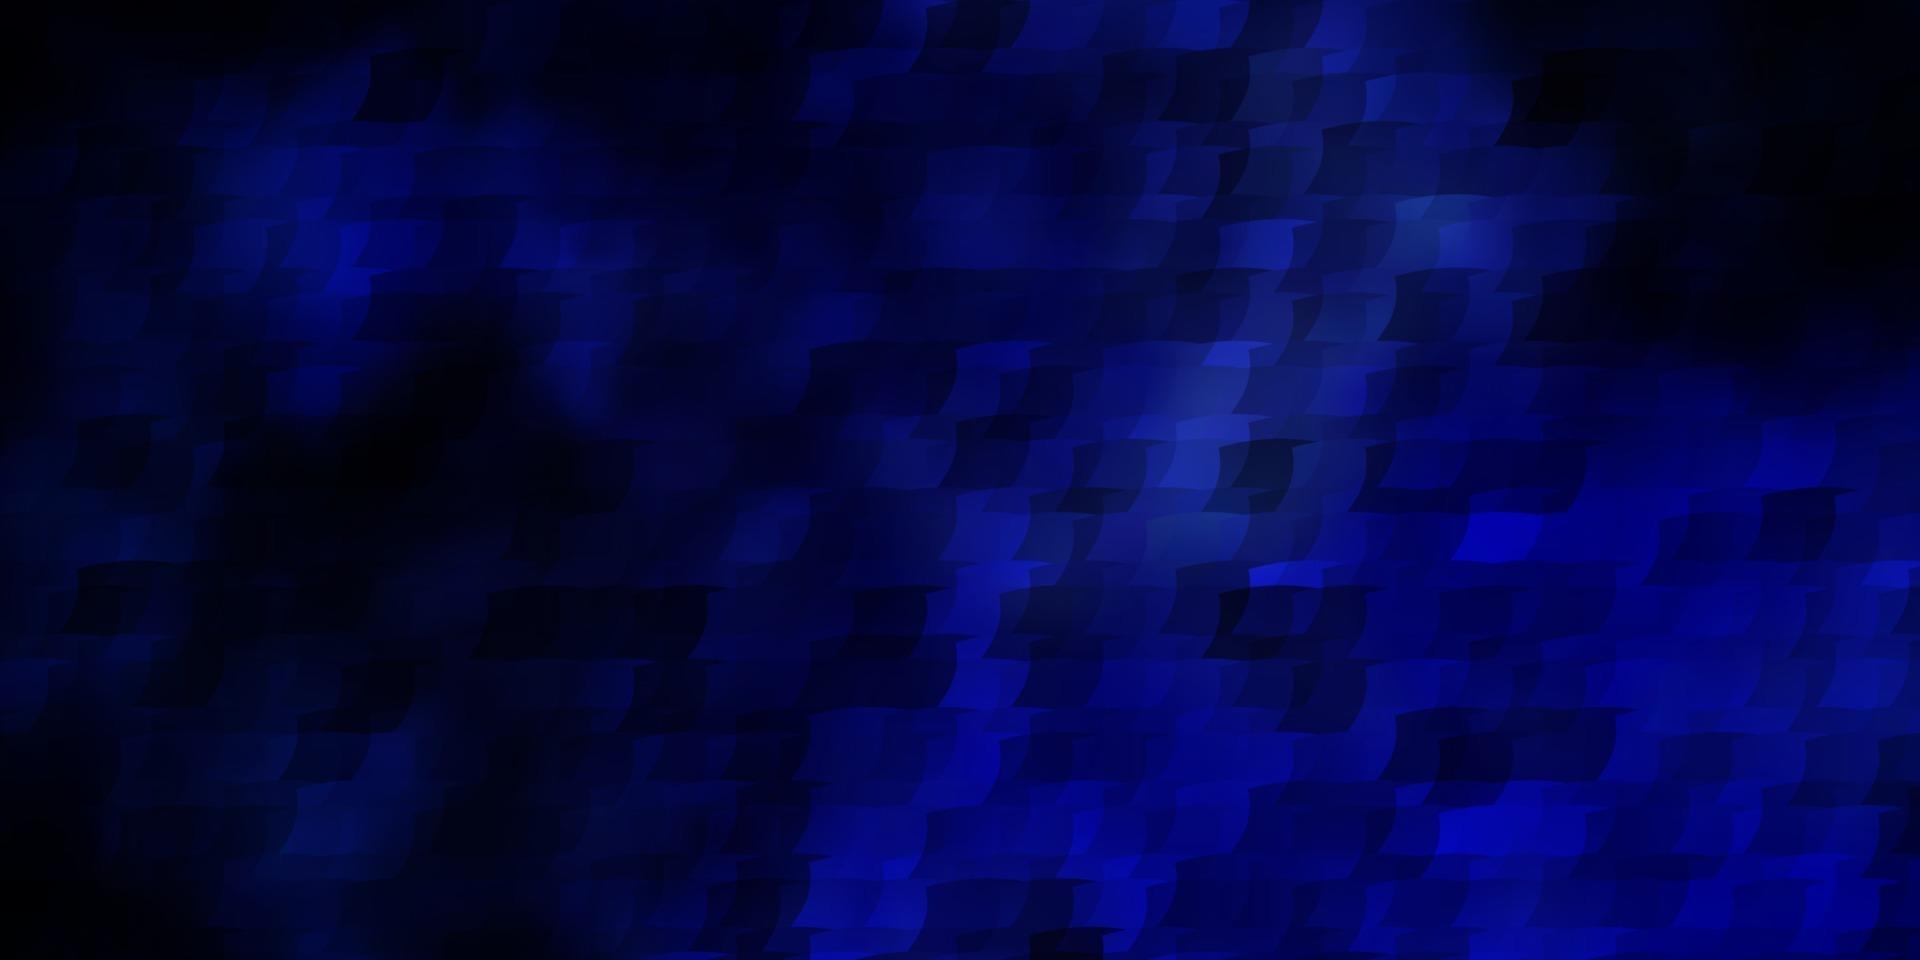 mörkblå vektorbakgrund med rektanglar. vektor